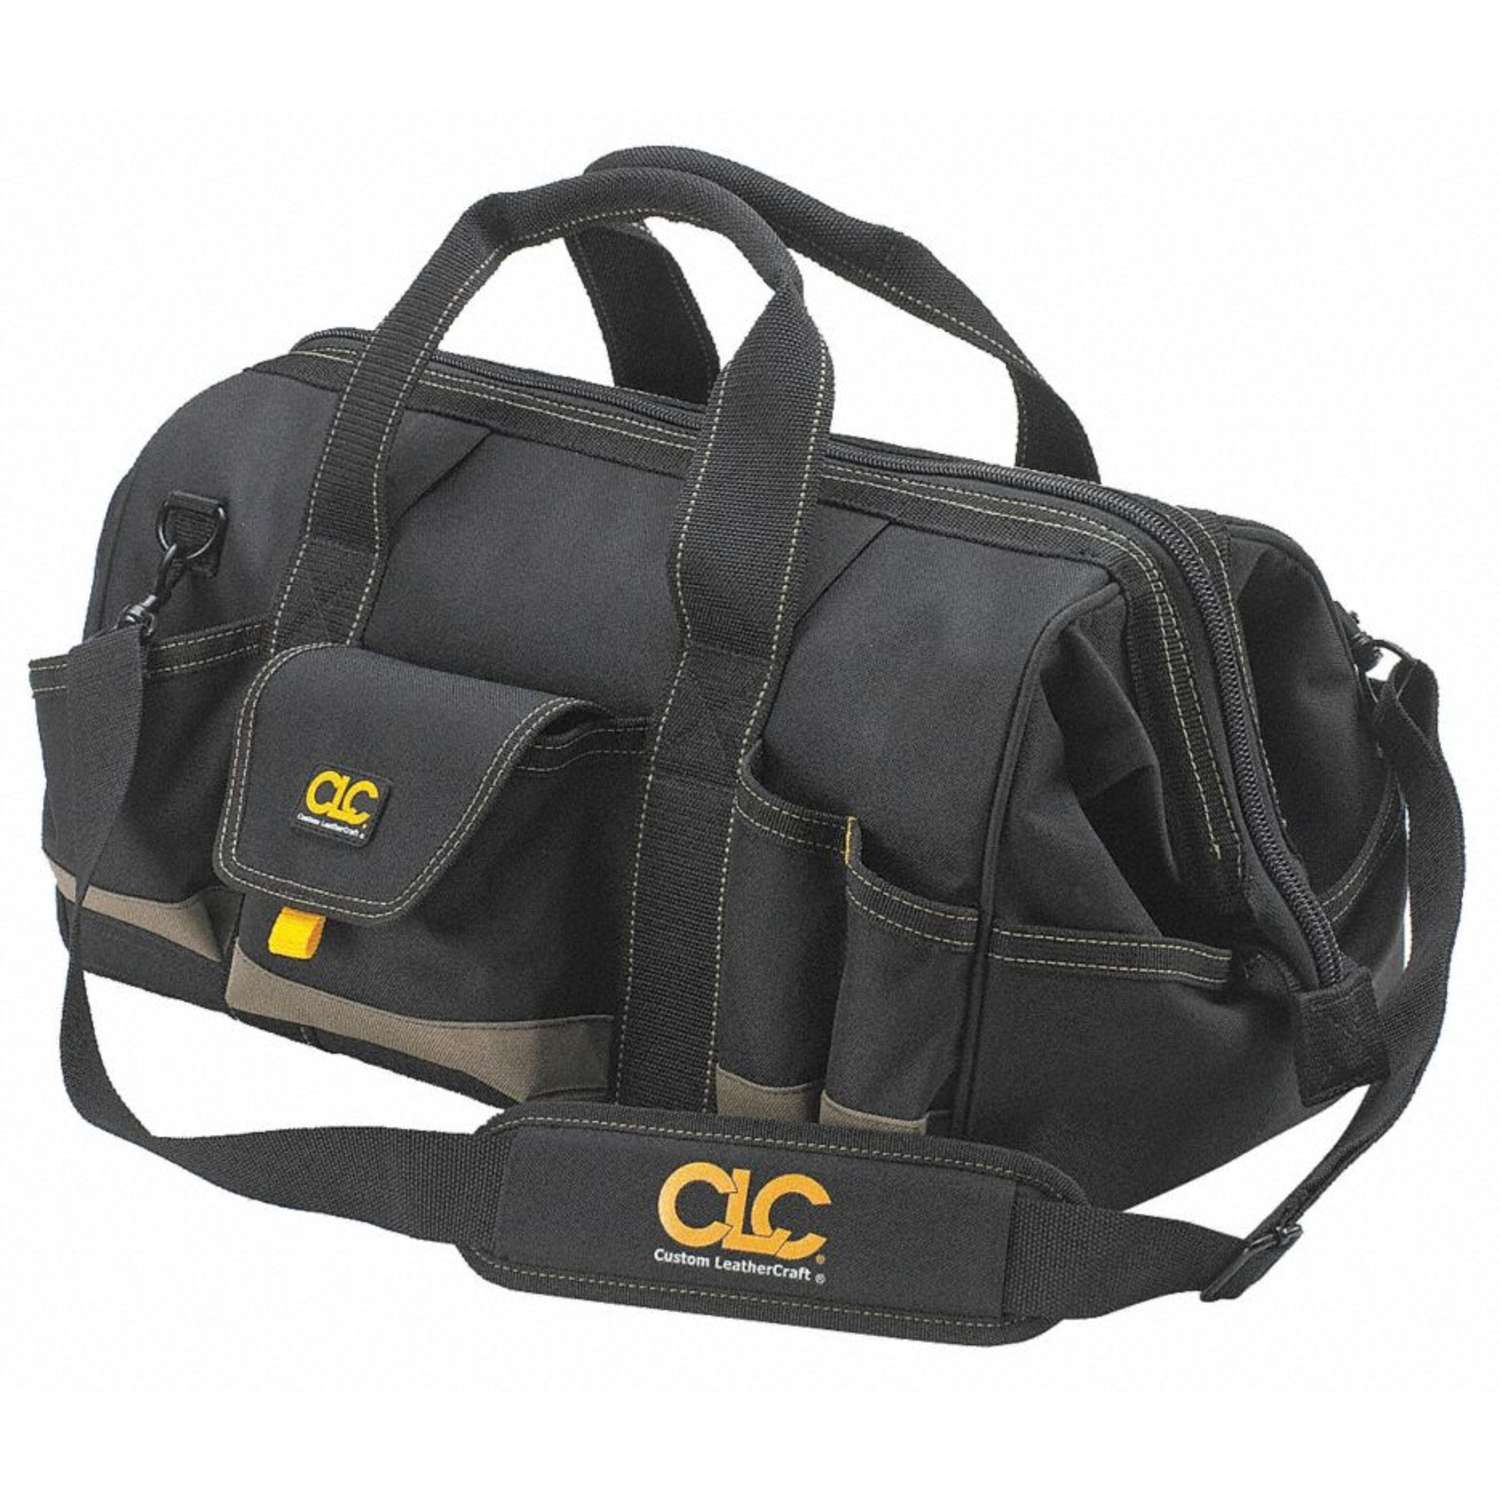 CLC Custom LeatherCraft 1148 18 Pocket Drawstring Bucket Bag Tool Carrier Holder 